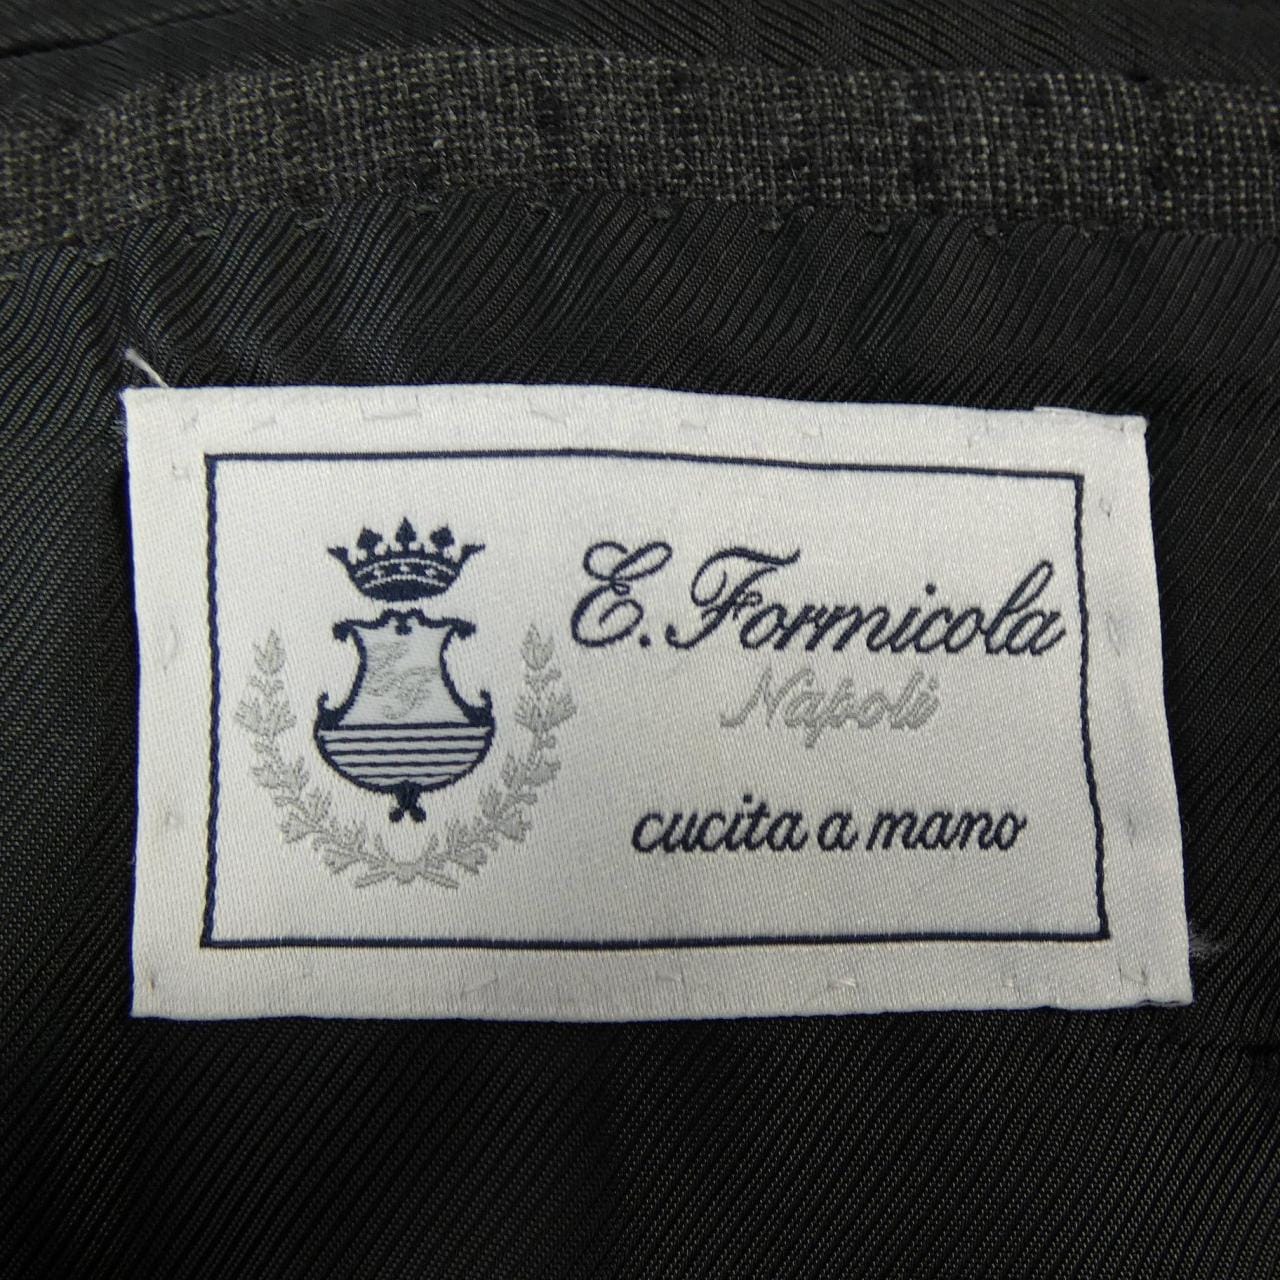 Ericco Formicola ERRICO FORMICOLA Suit